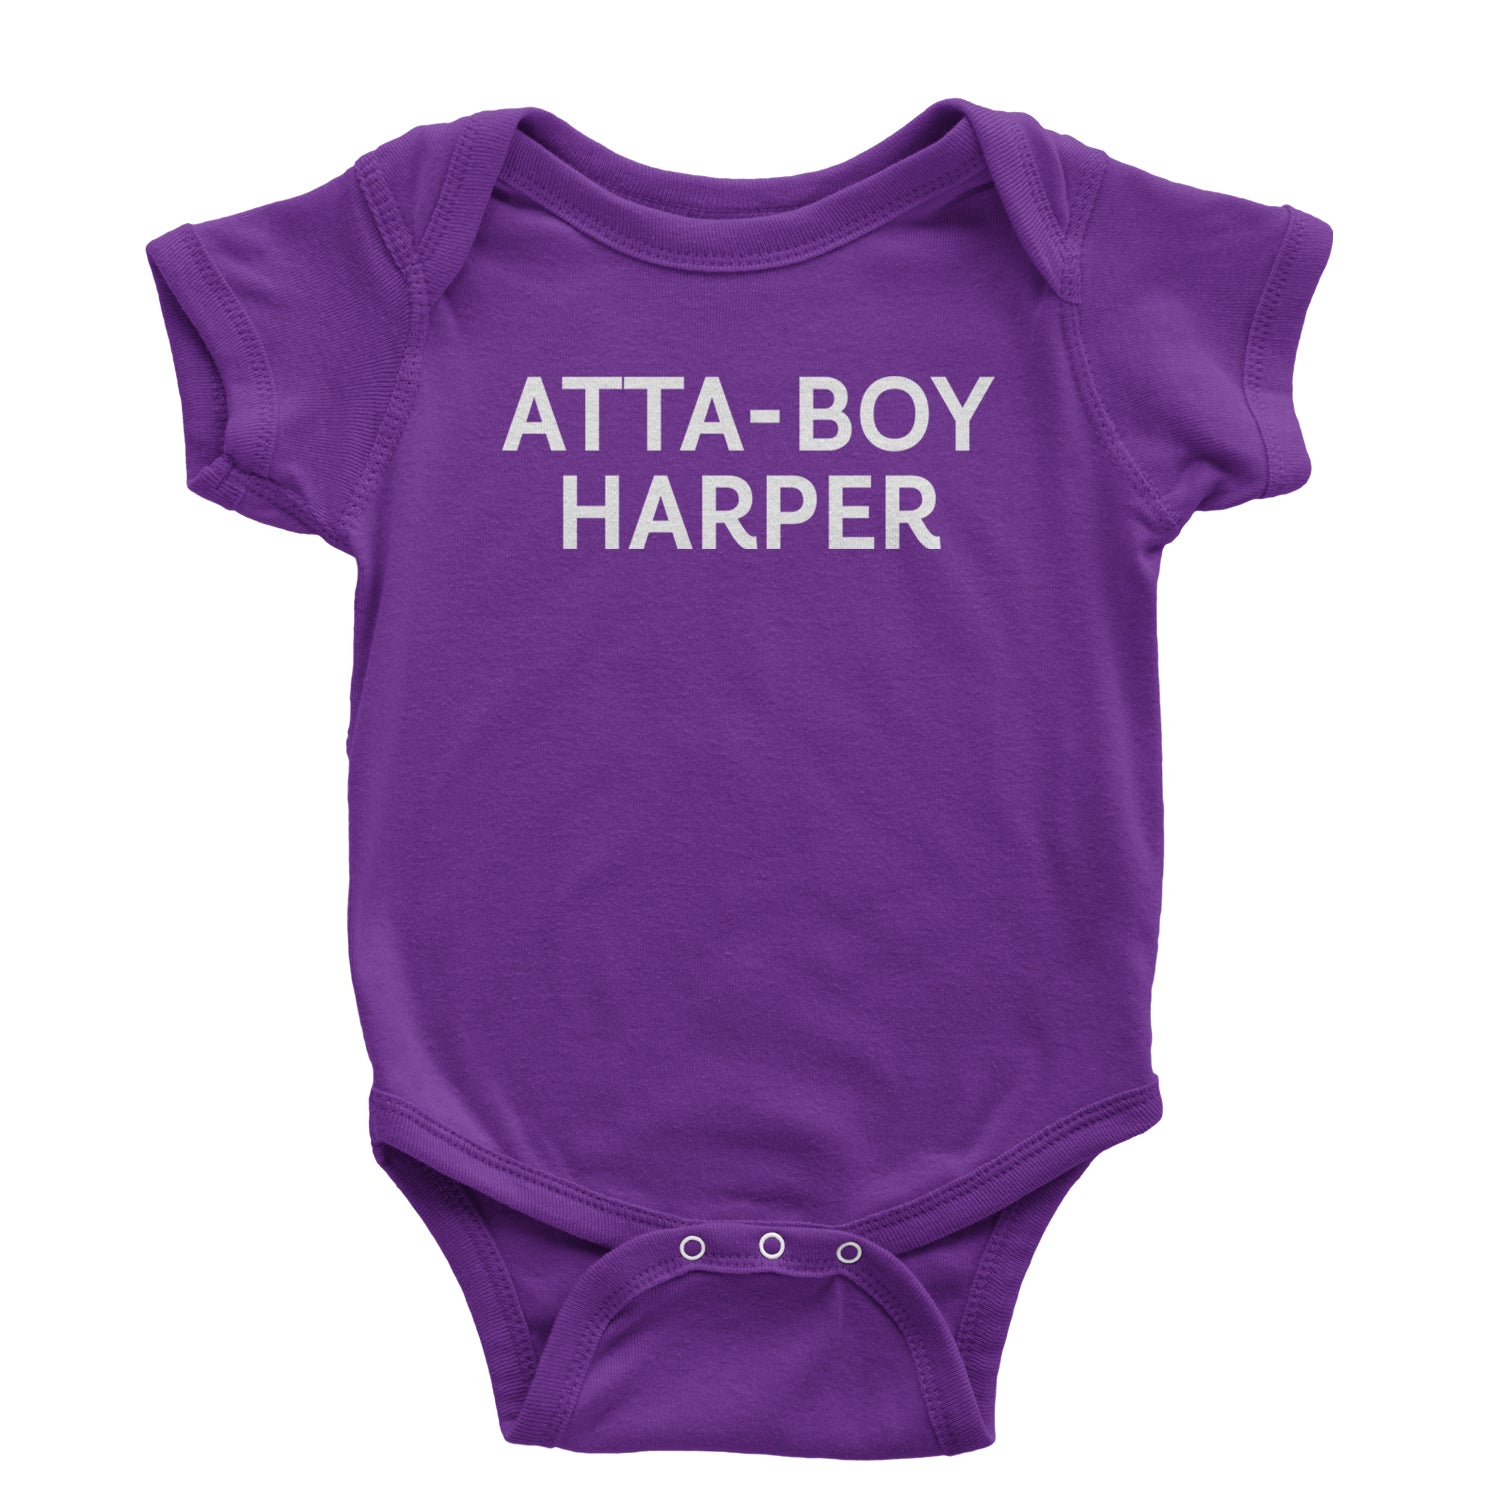 Atta-Boy Harper Philadelphia Infant One-Piece Romper Bodysuit and Toddler T-shirt